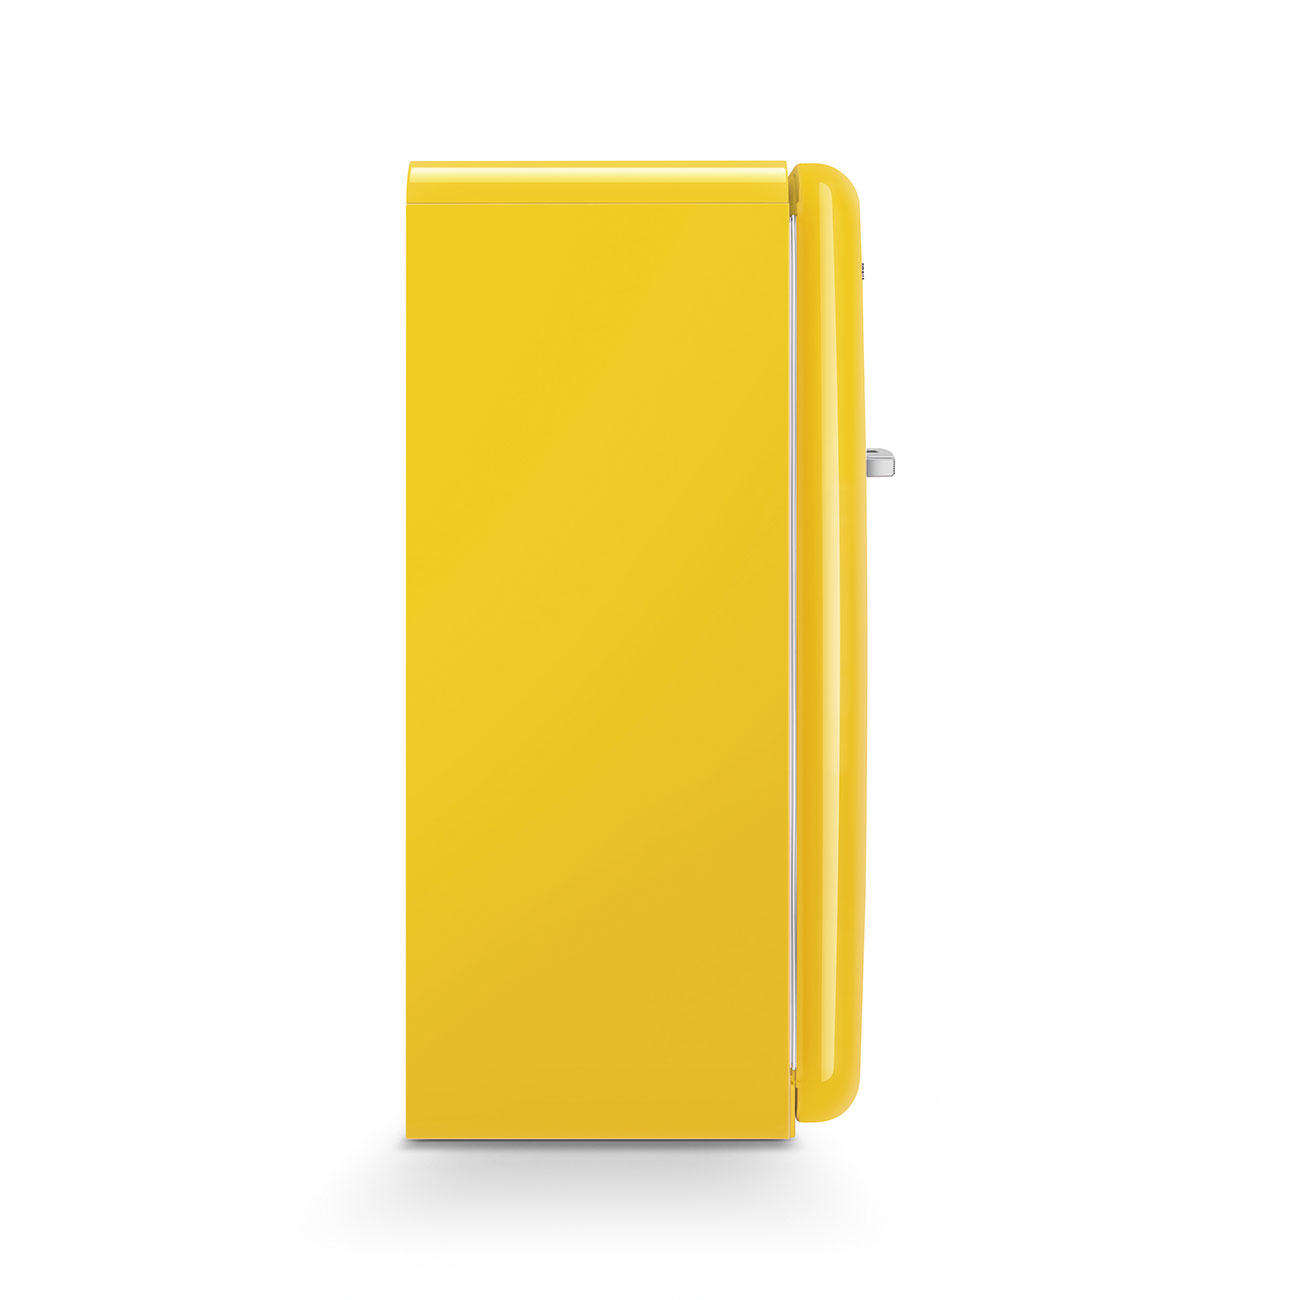 Yellow refrigerator - Smeg_6